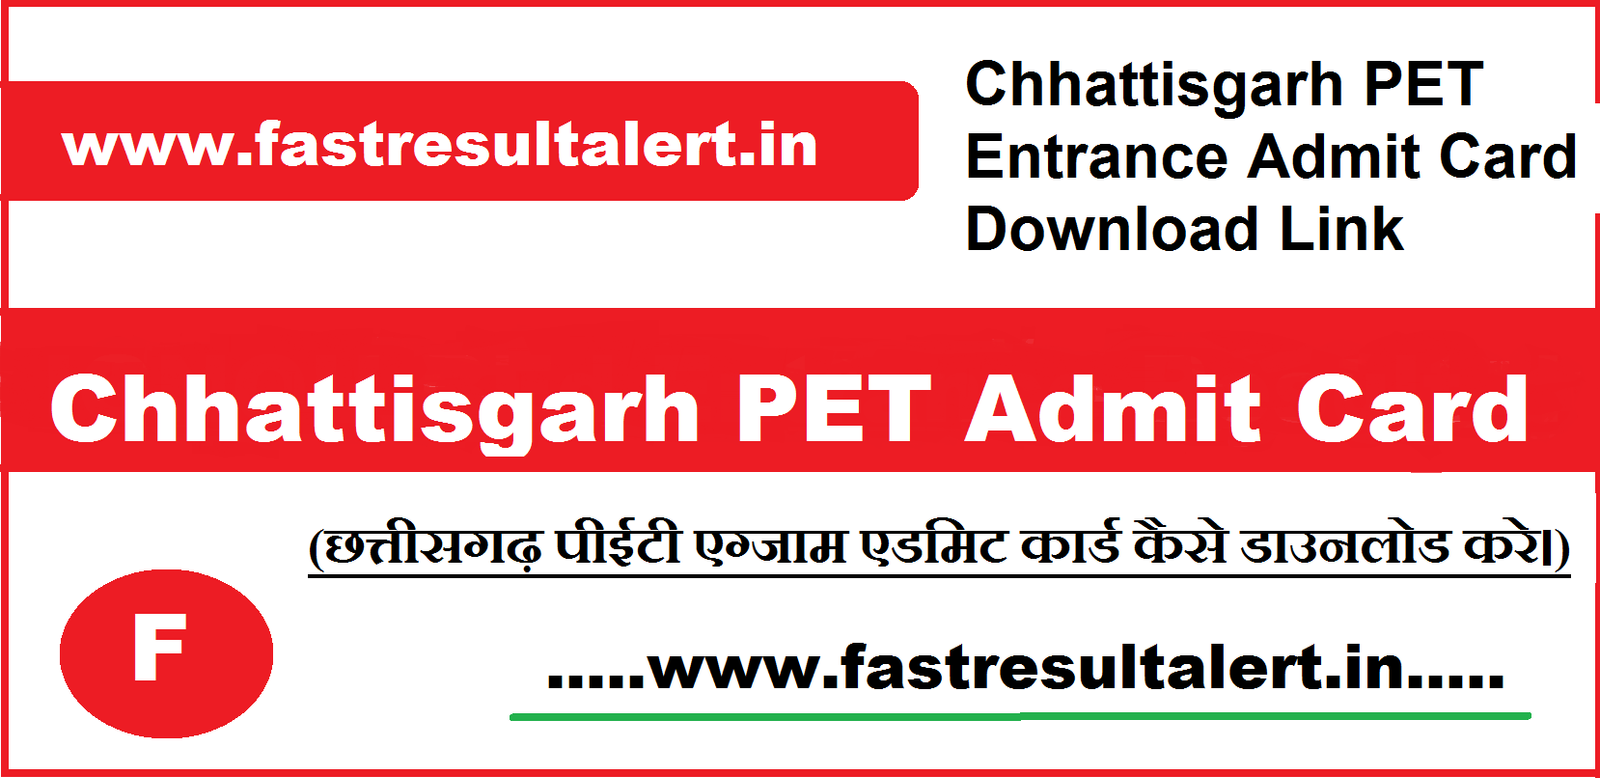 Chhattisgarh PET Entrance Admit Card